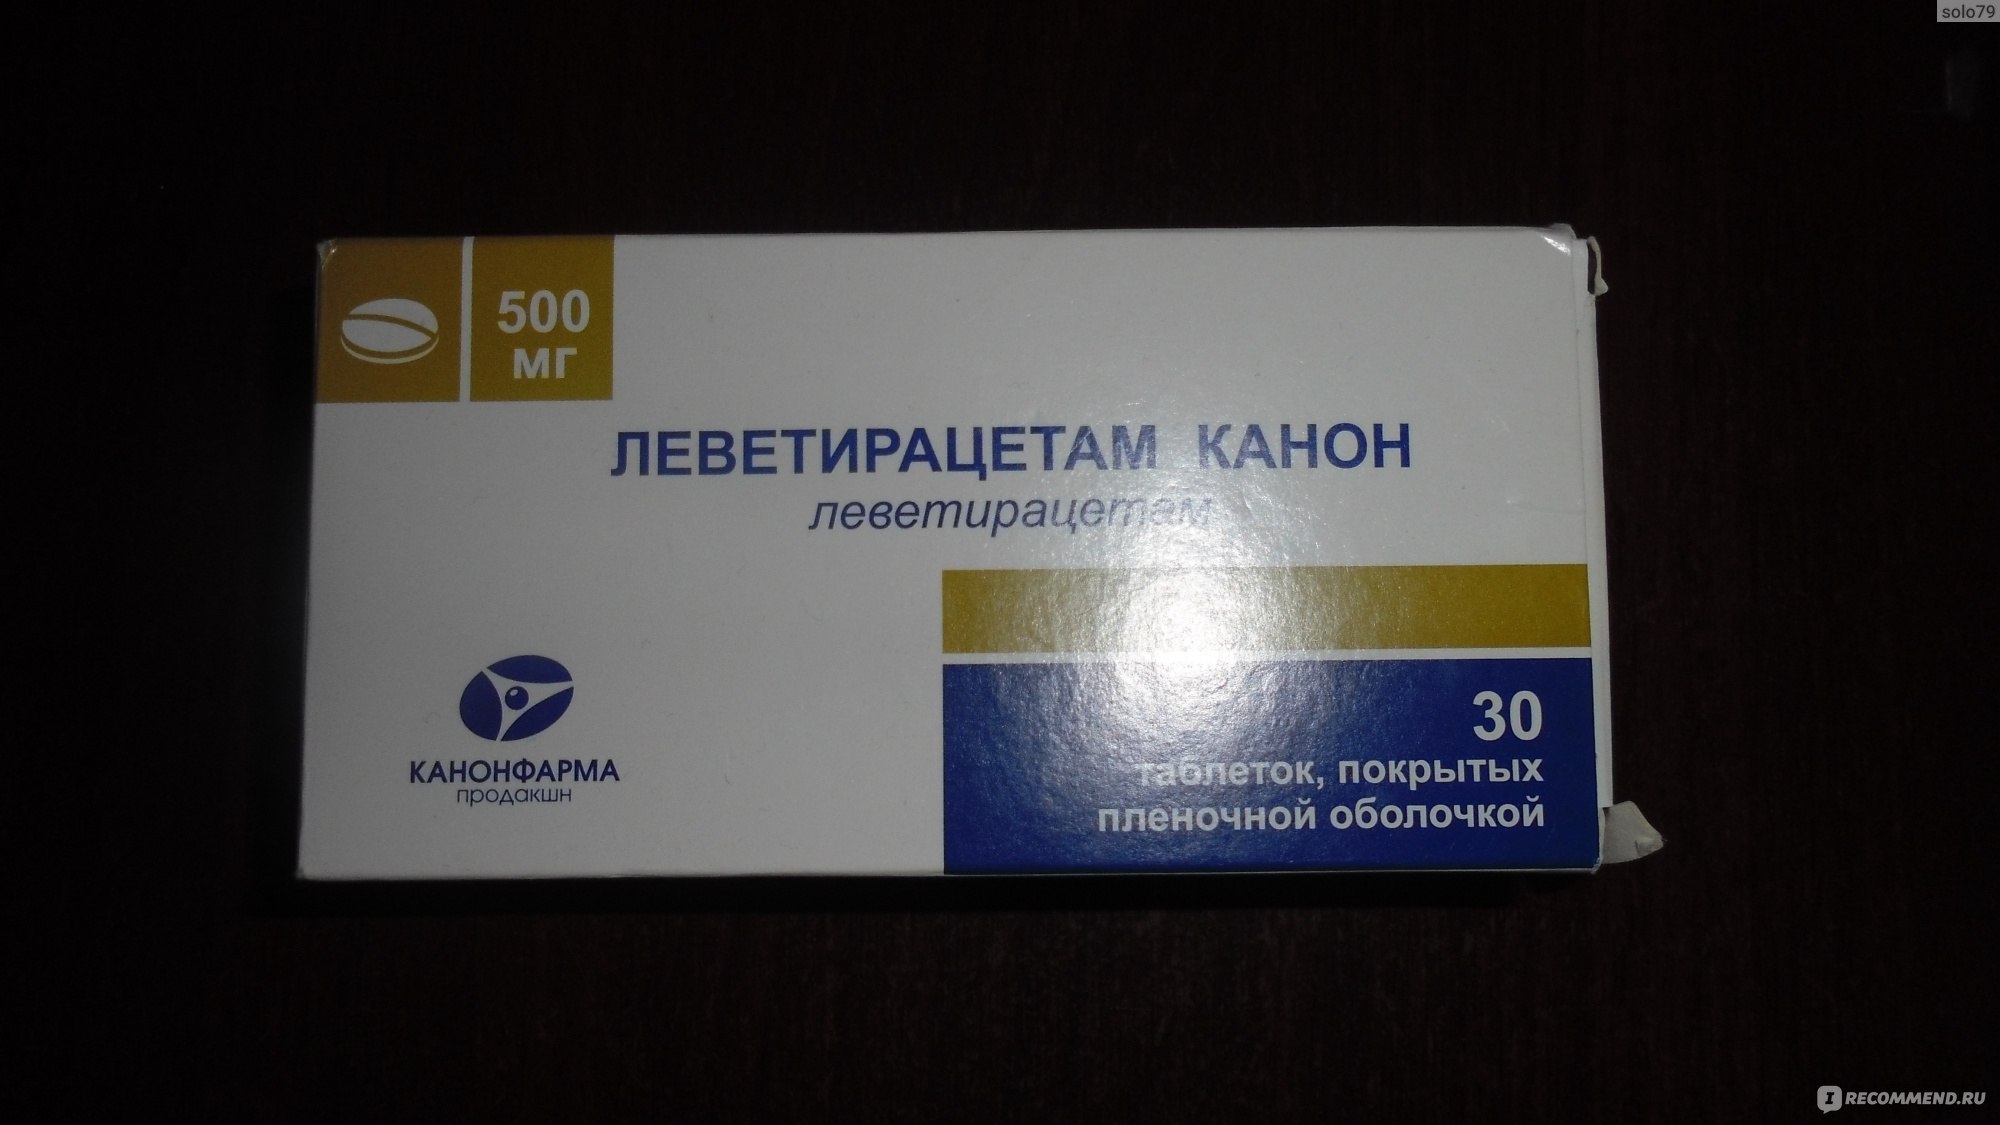 Противоэпилептические препараты ЗАО 